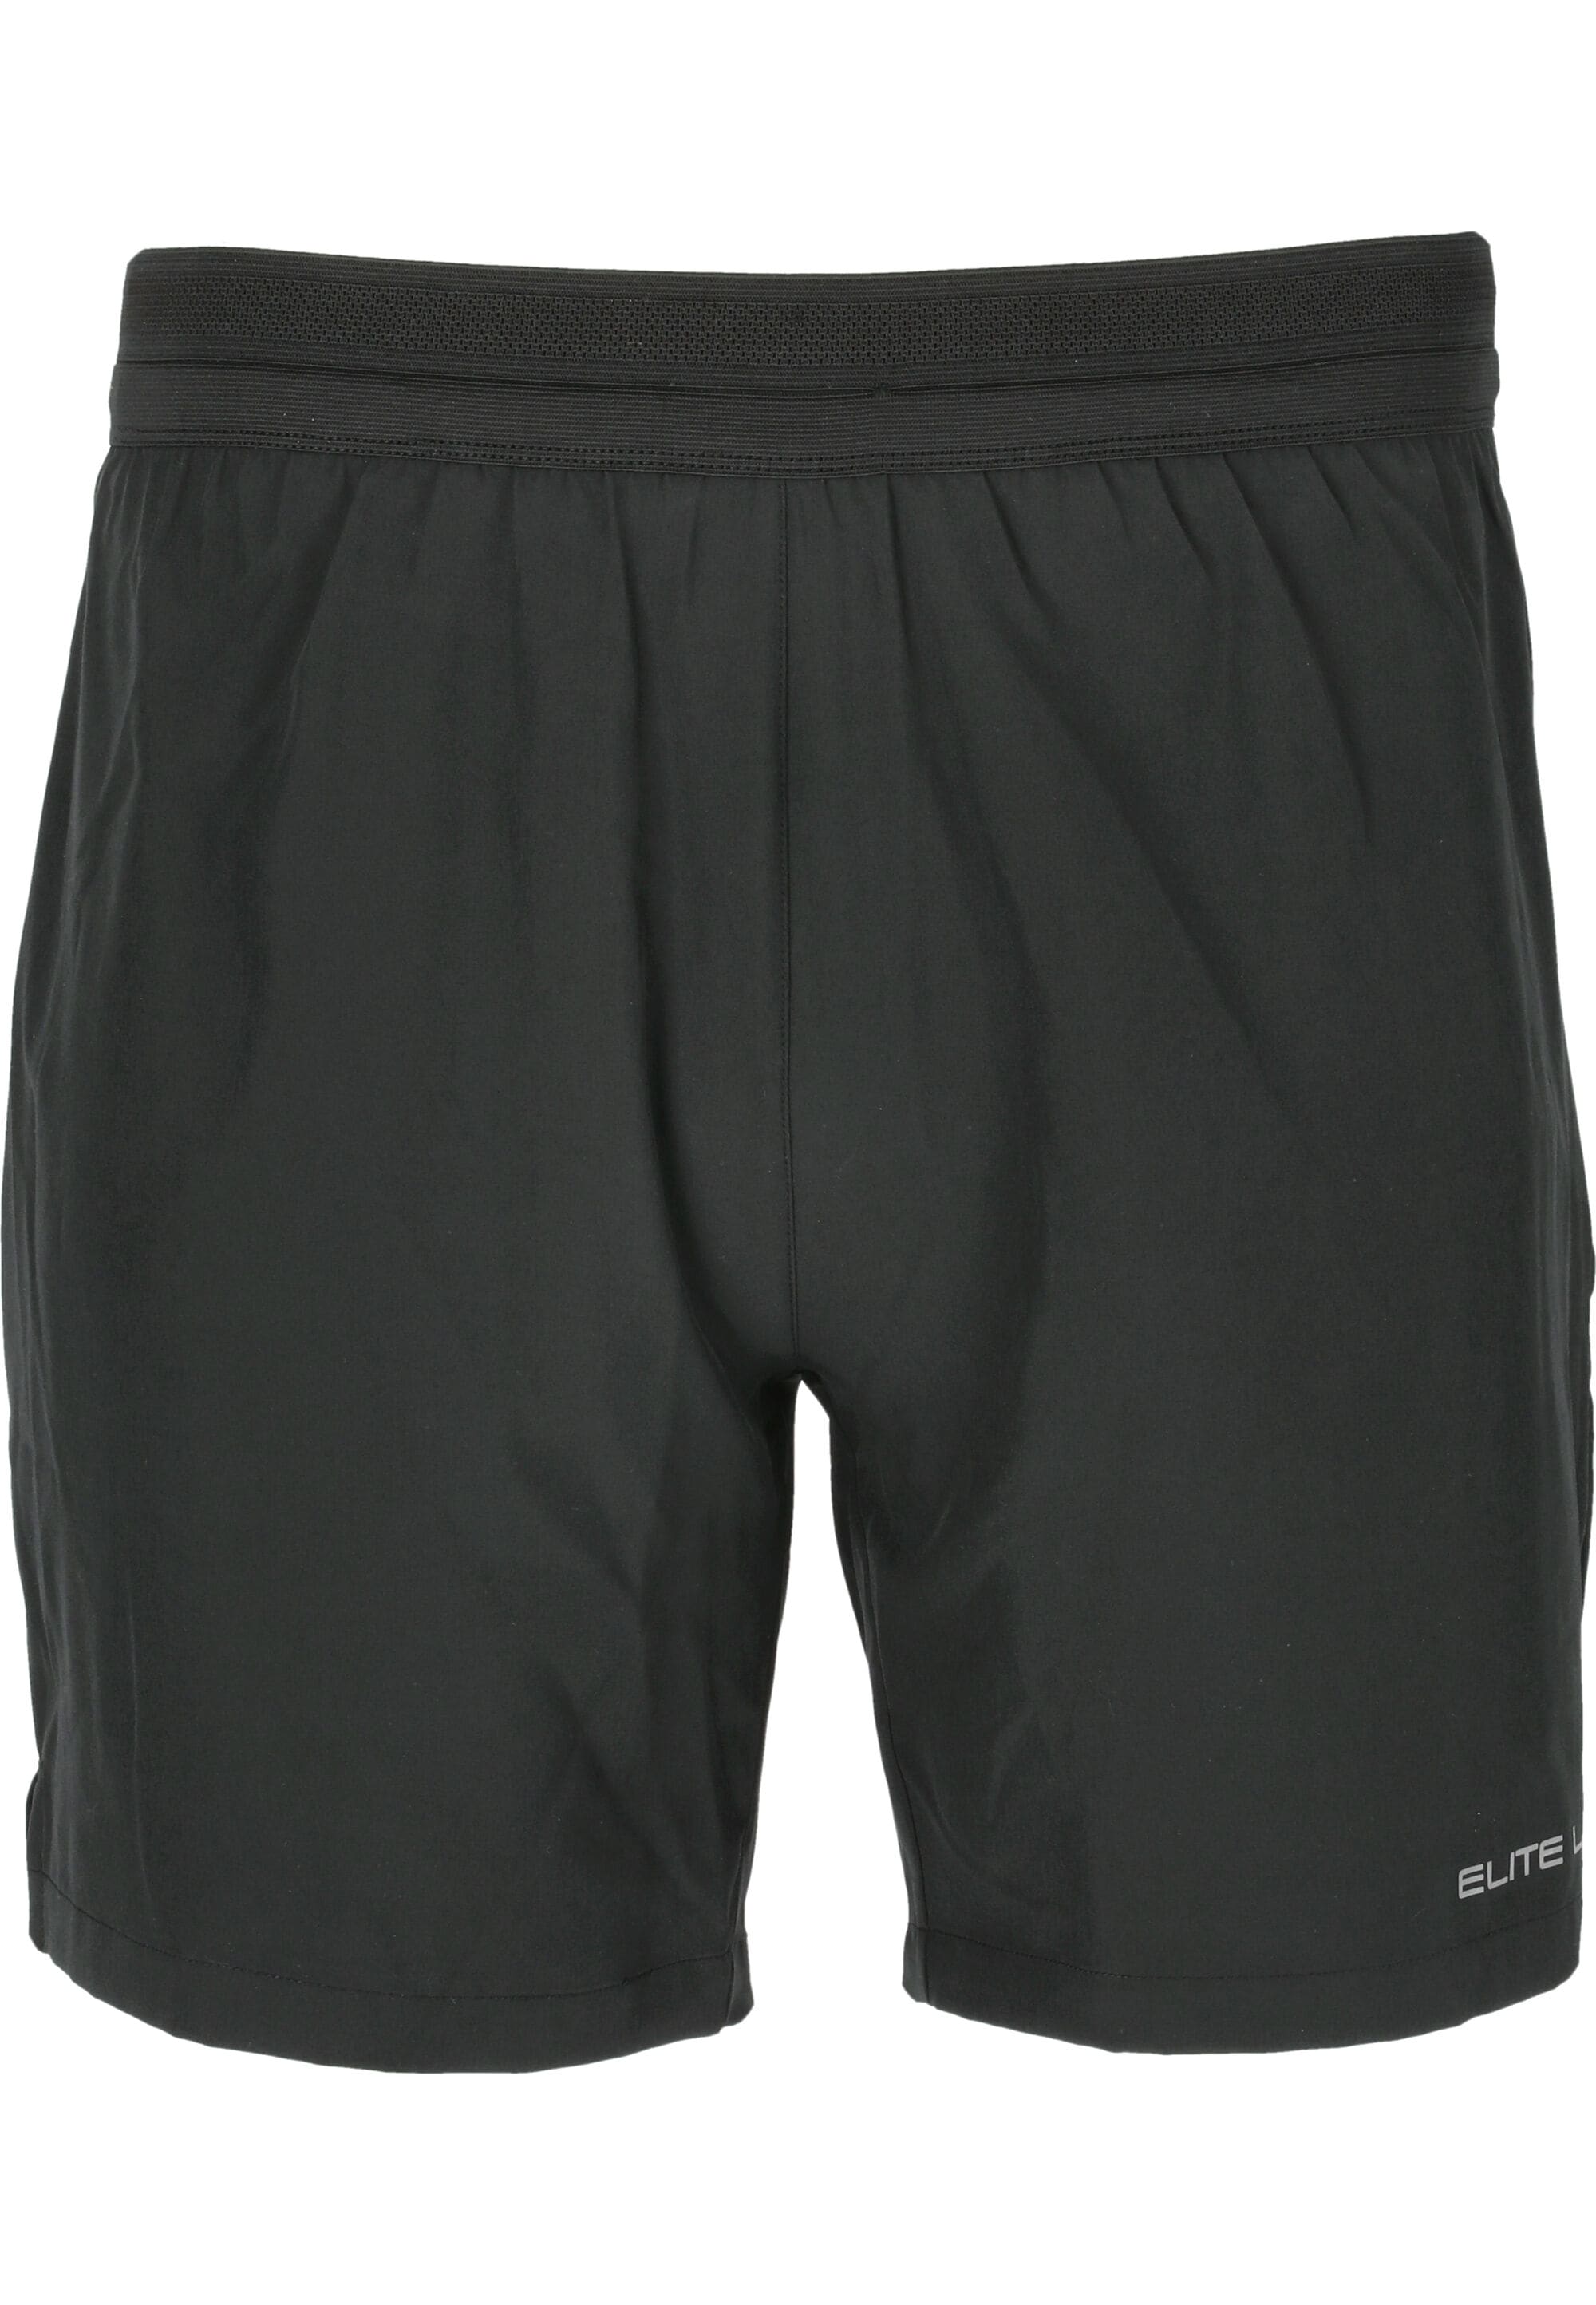 ELITE LAB Shorts »Run«, mit funktionaler Quick-Dry-Technologie